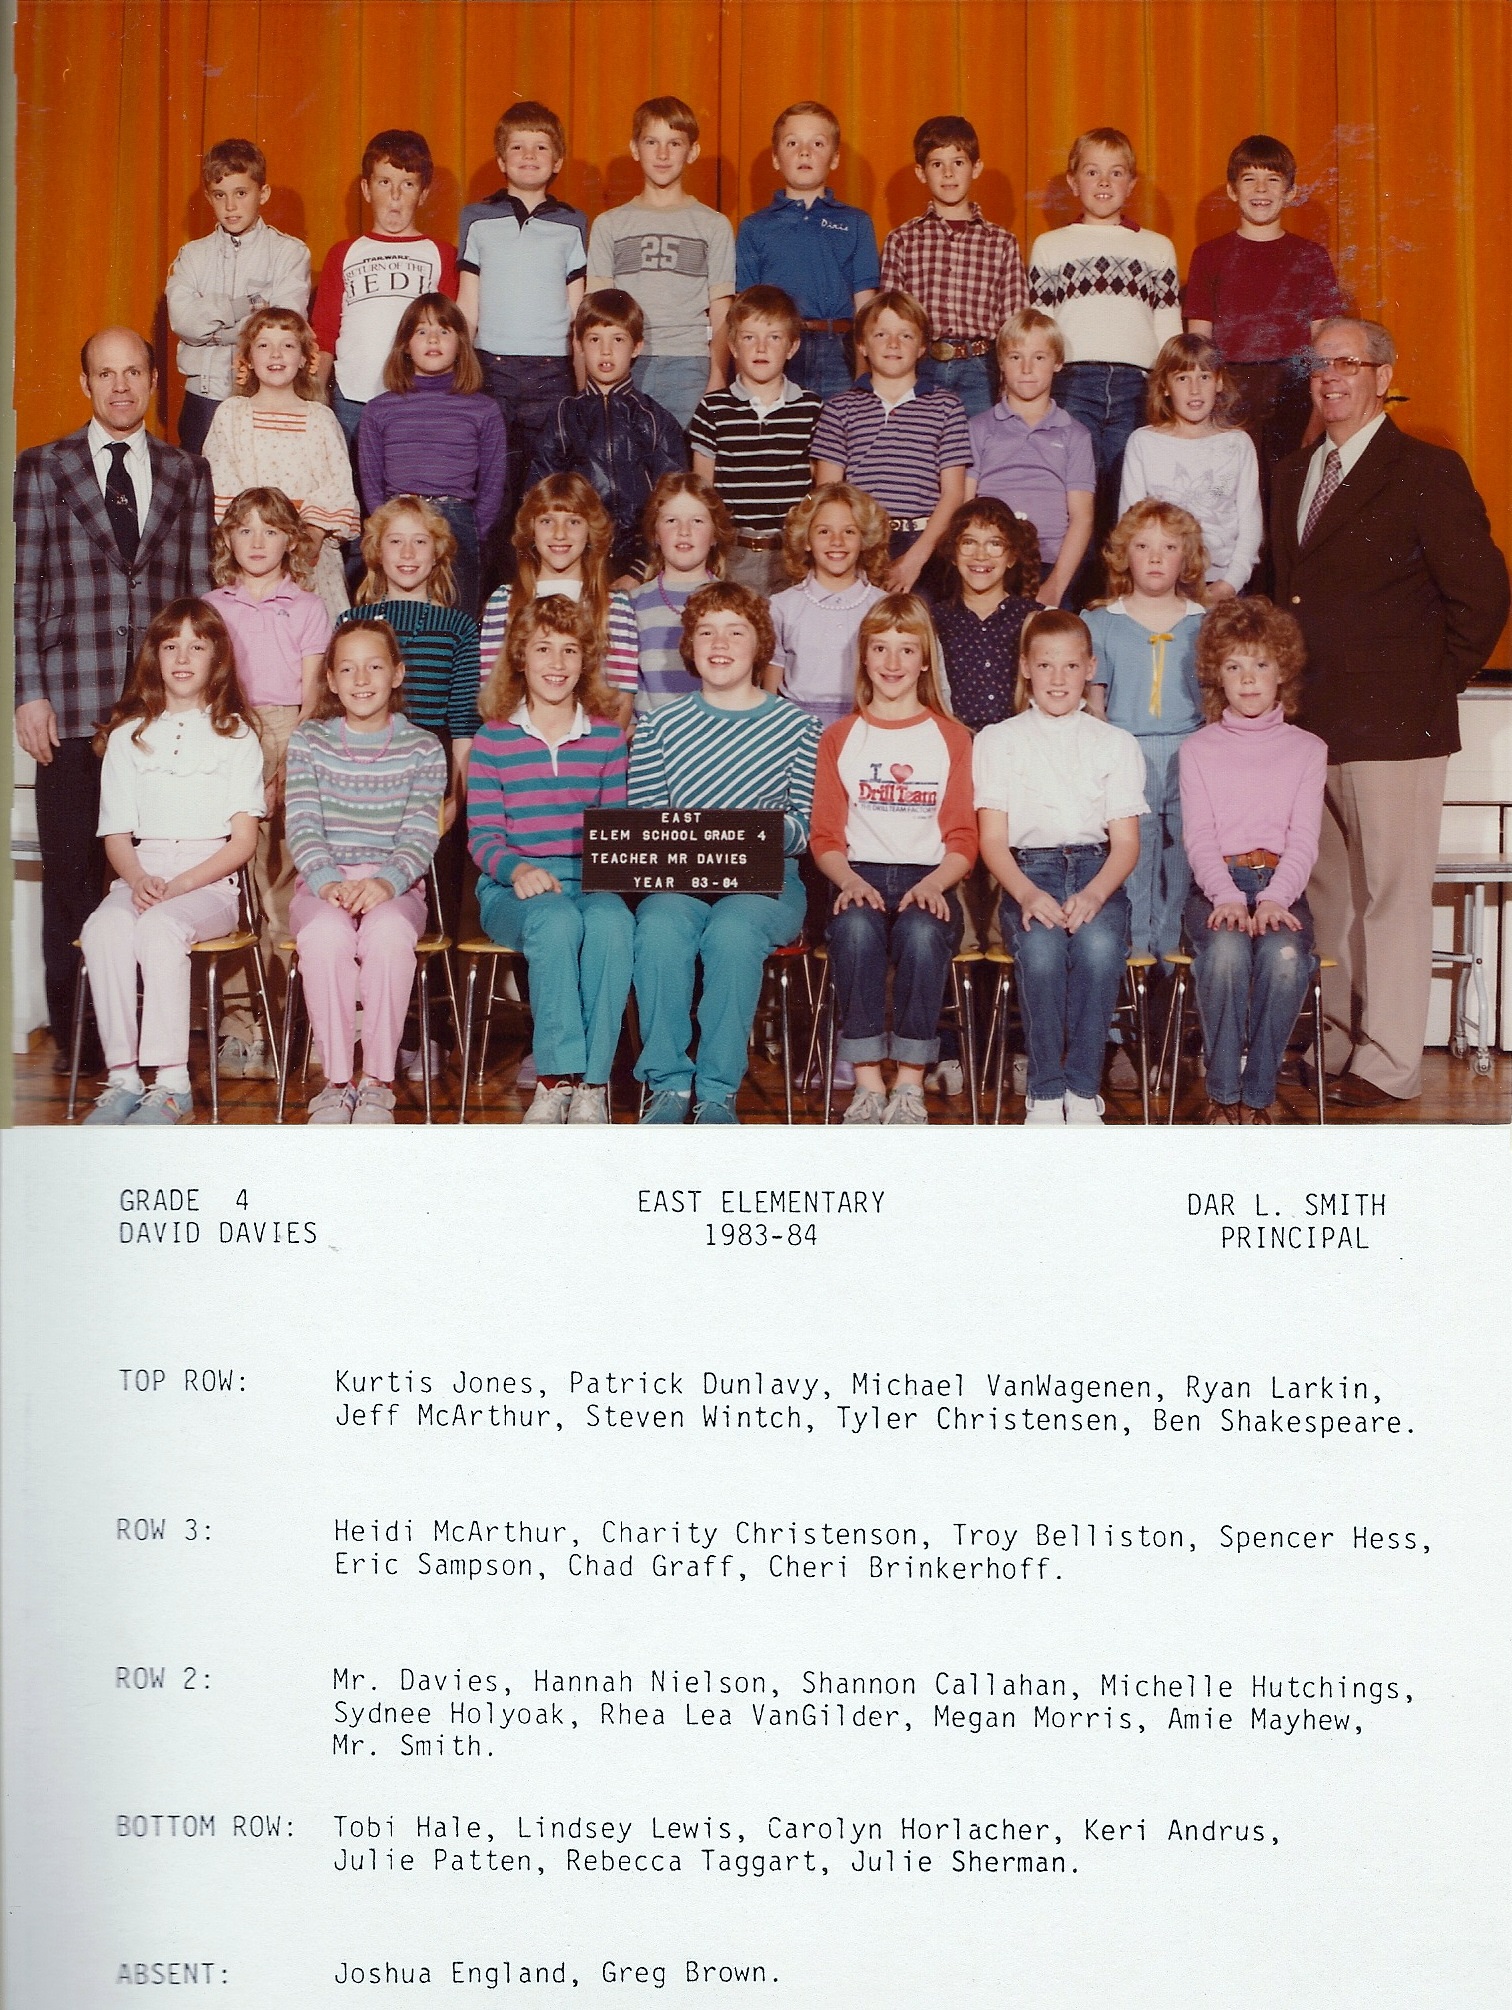 Mr. David Davies' 1983-1984 fourth grade class at East Elementary School